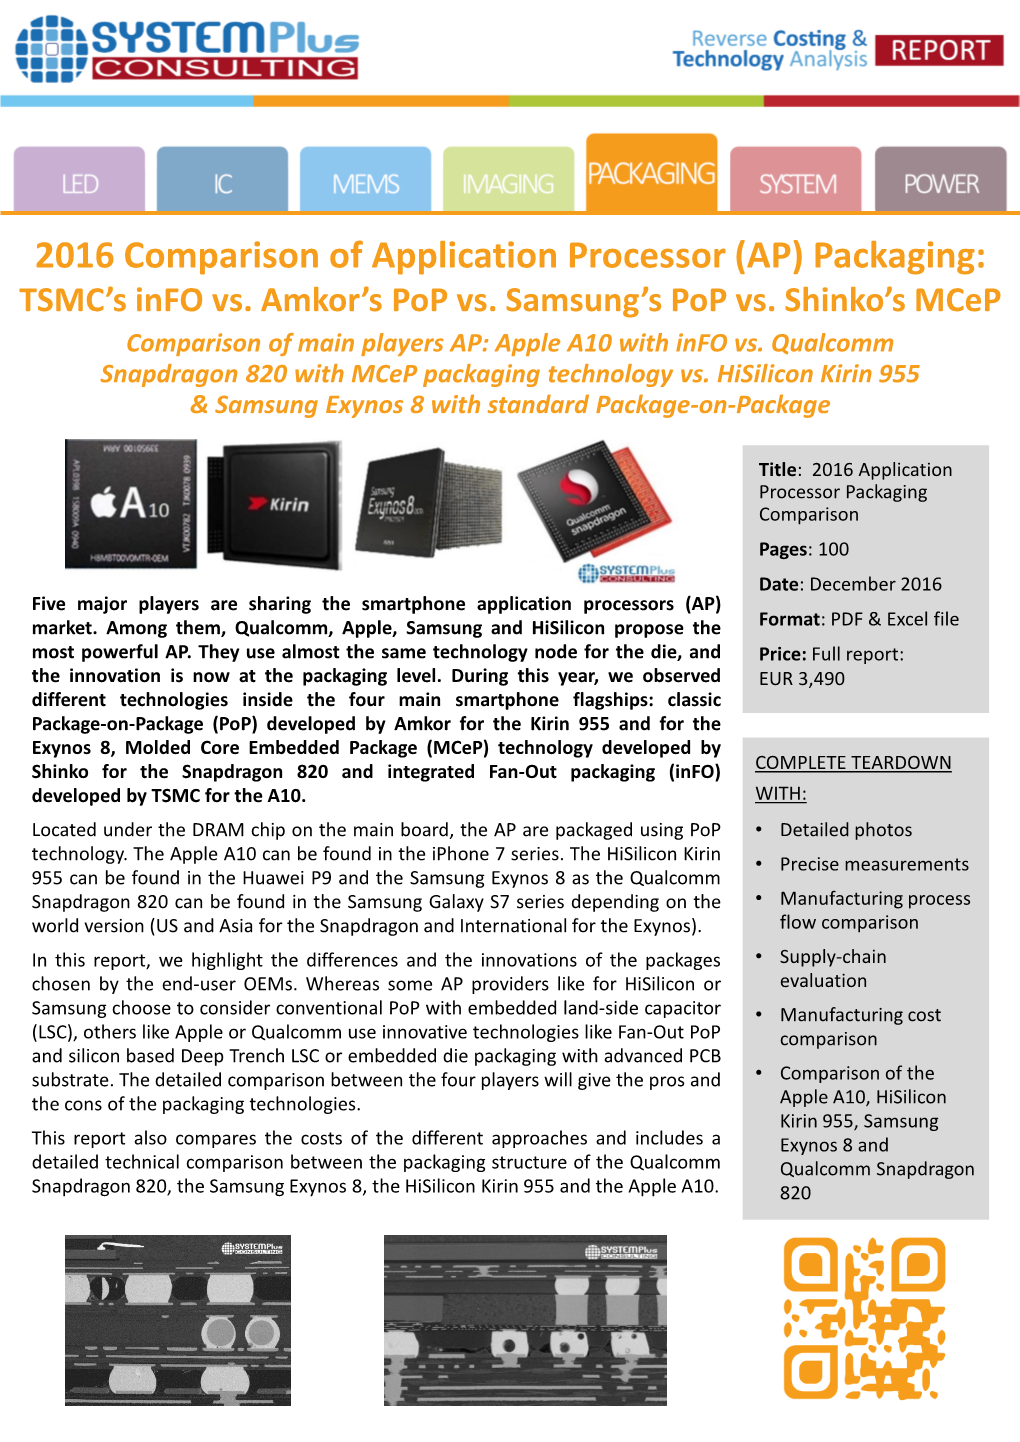 2016 Comparison of Application Processor (AP) Packaging: TSMC’S Info Vs